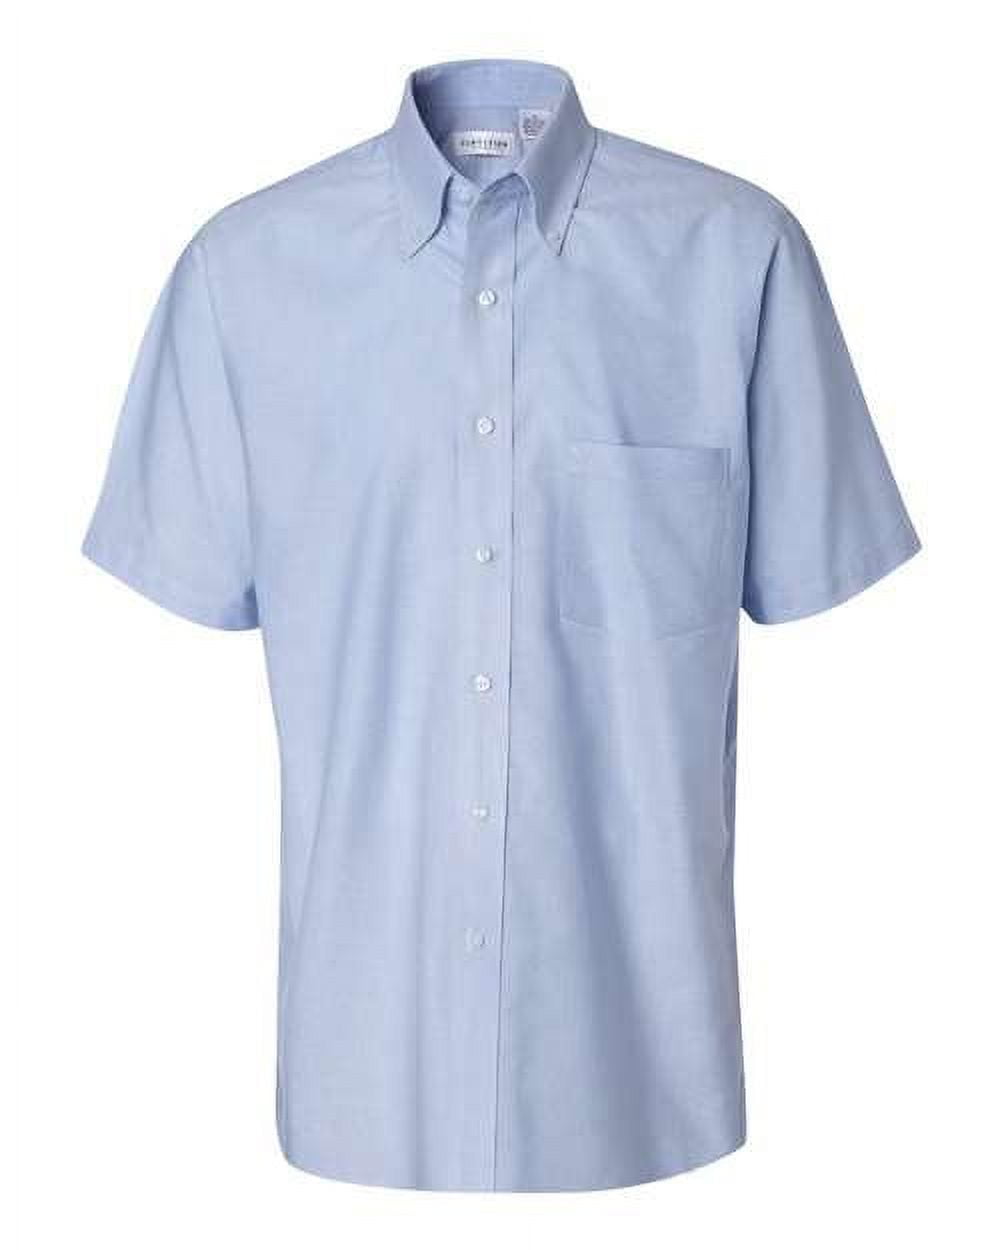 Van Heusen Short Sleeve Oxford Shirt in Light Blue 2XL | 13V0042 ...